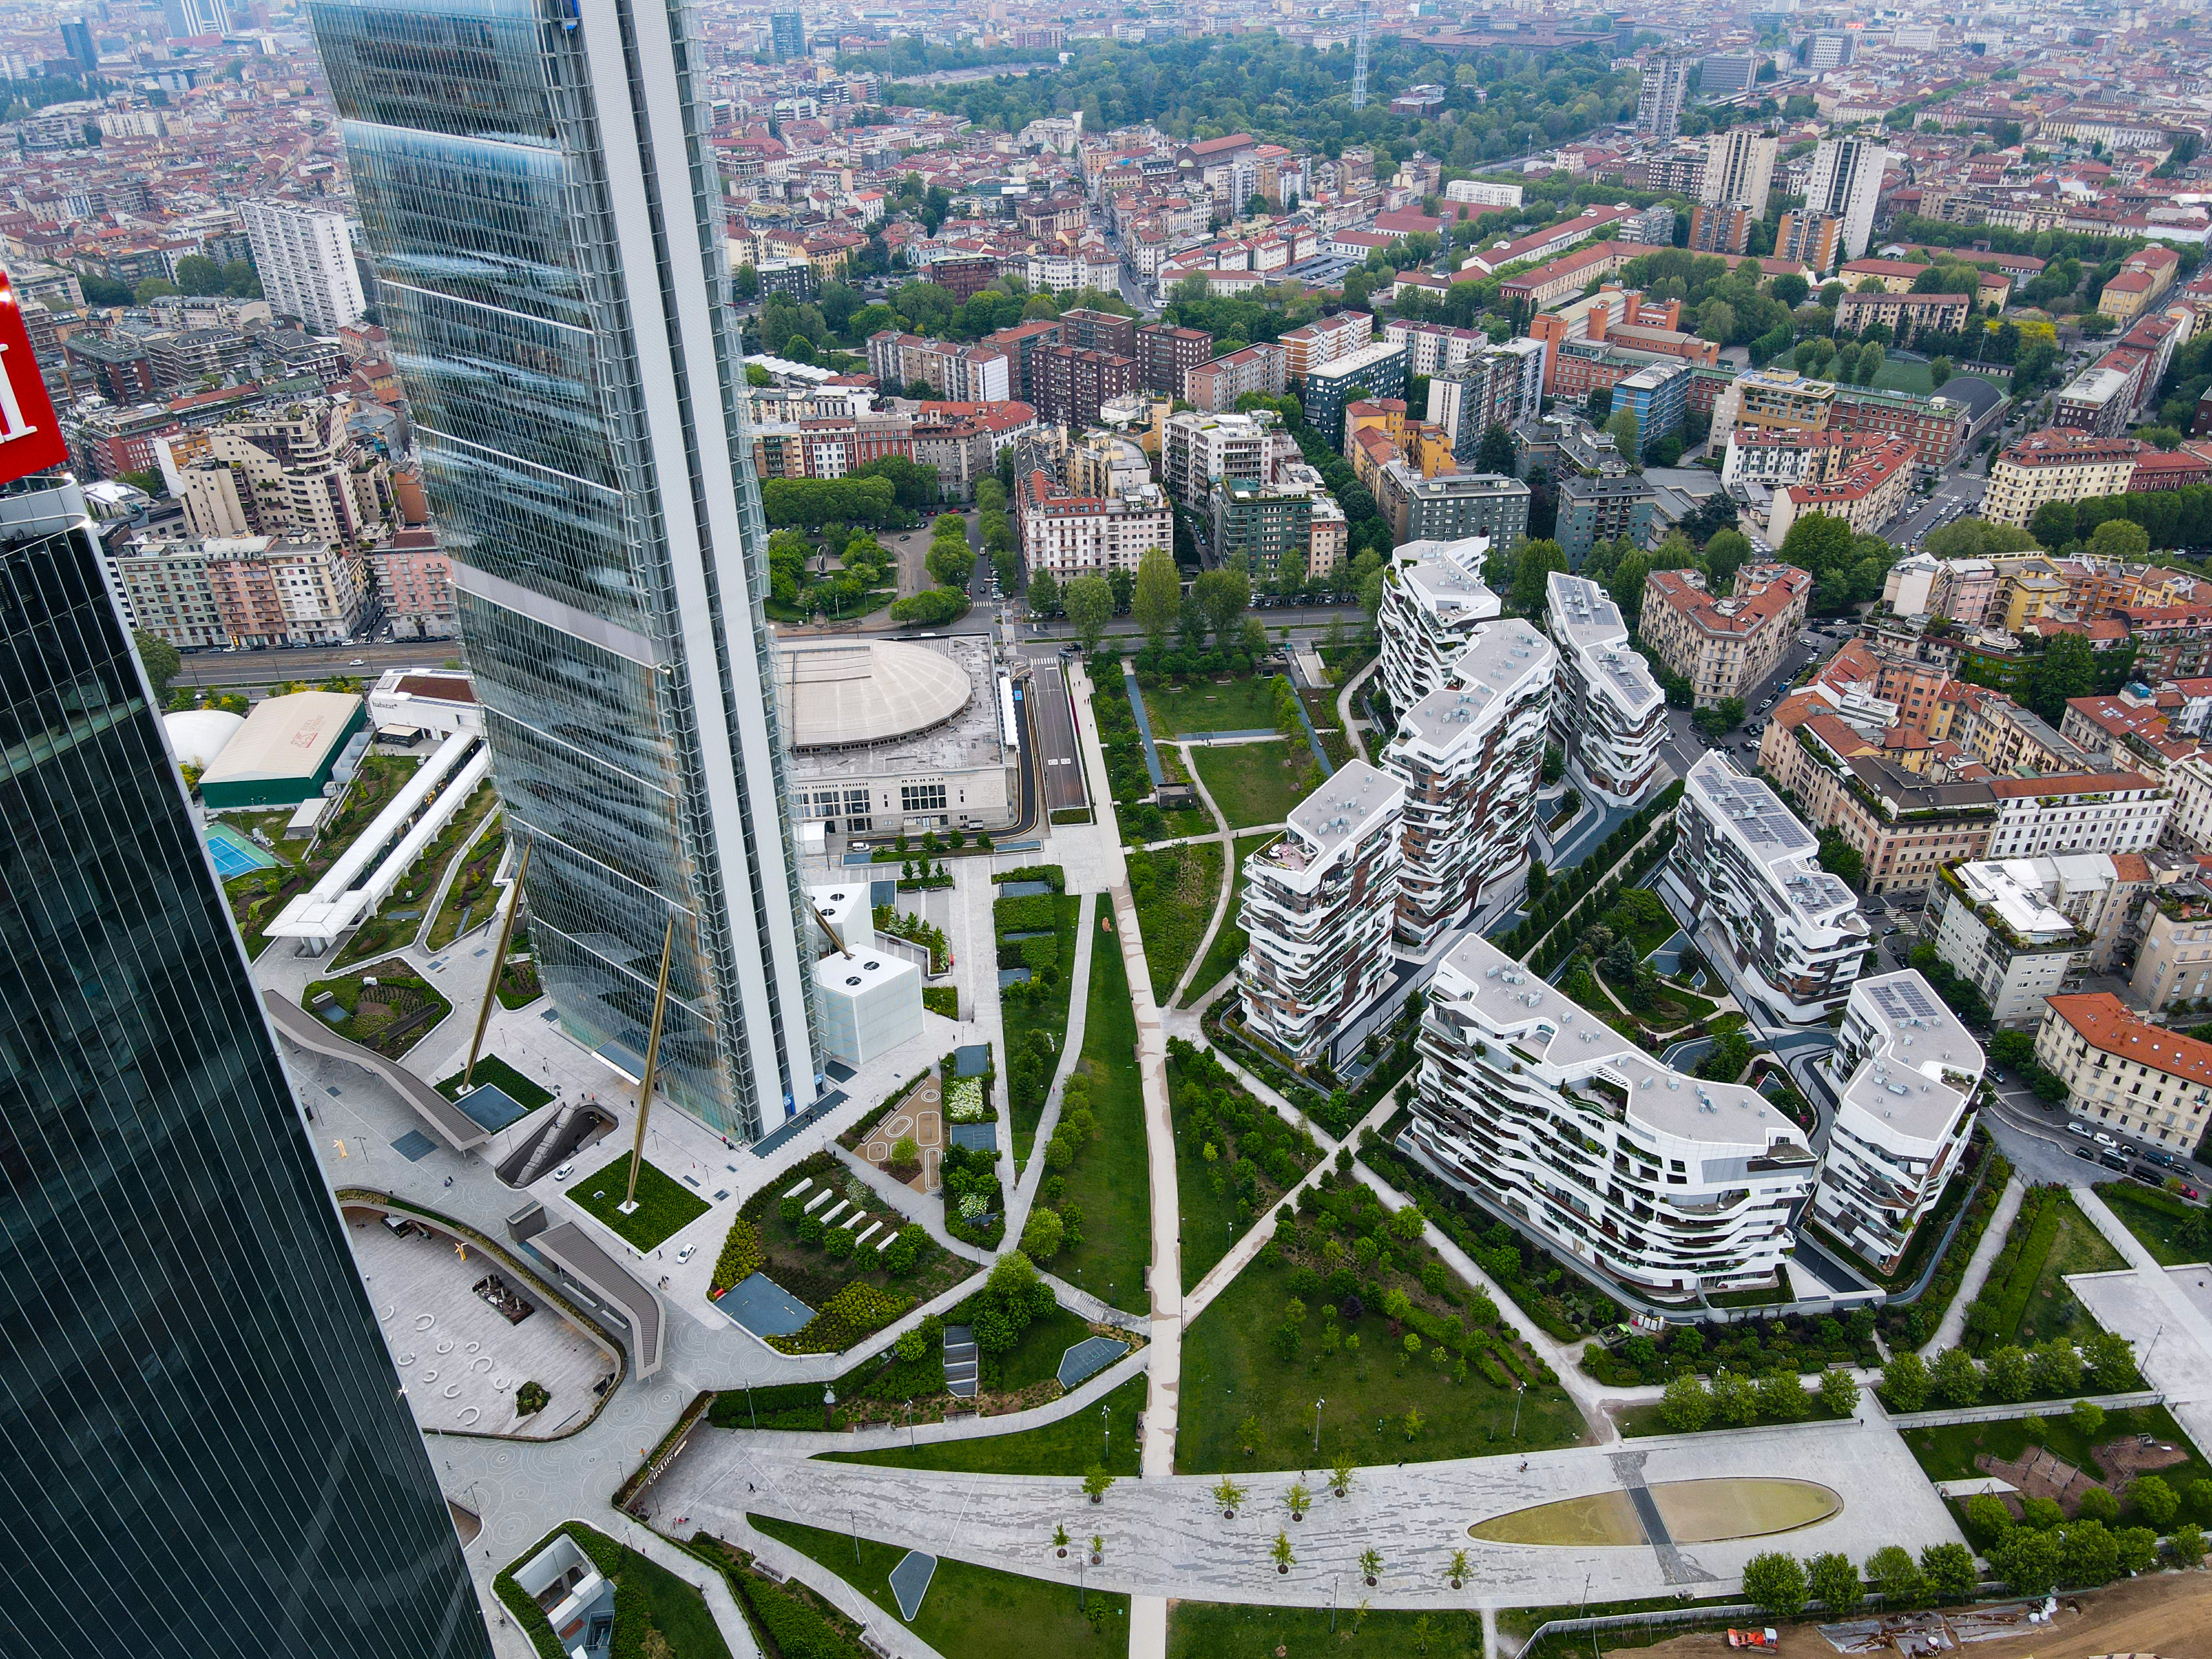 Milan named world's Best City by Wallpaper Magazine – Zaha Hadid Architects